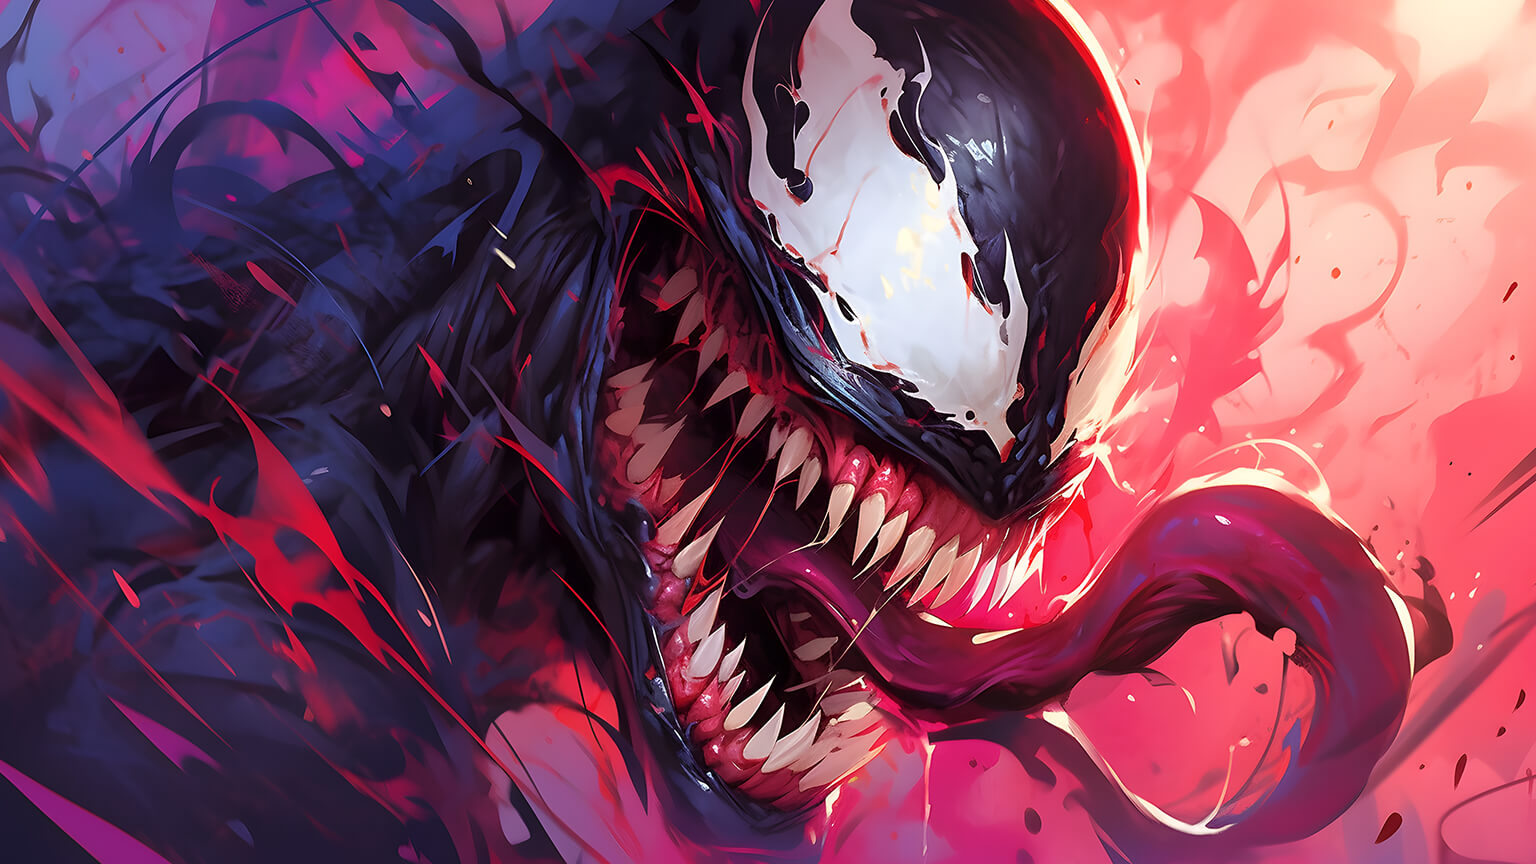 Red Venom Artwork 4k Venom wallpapers, superheroes wallpapers, hd